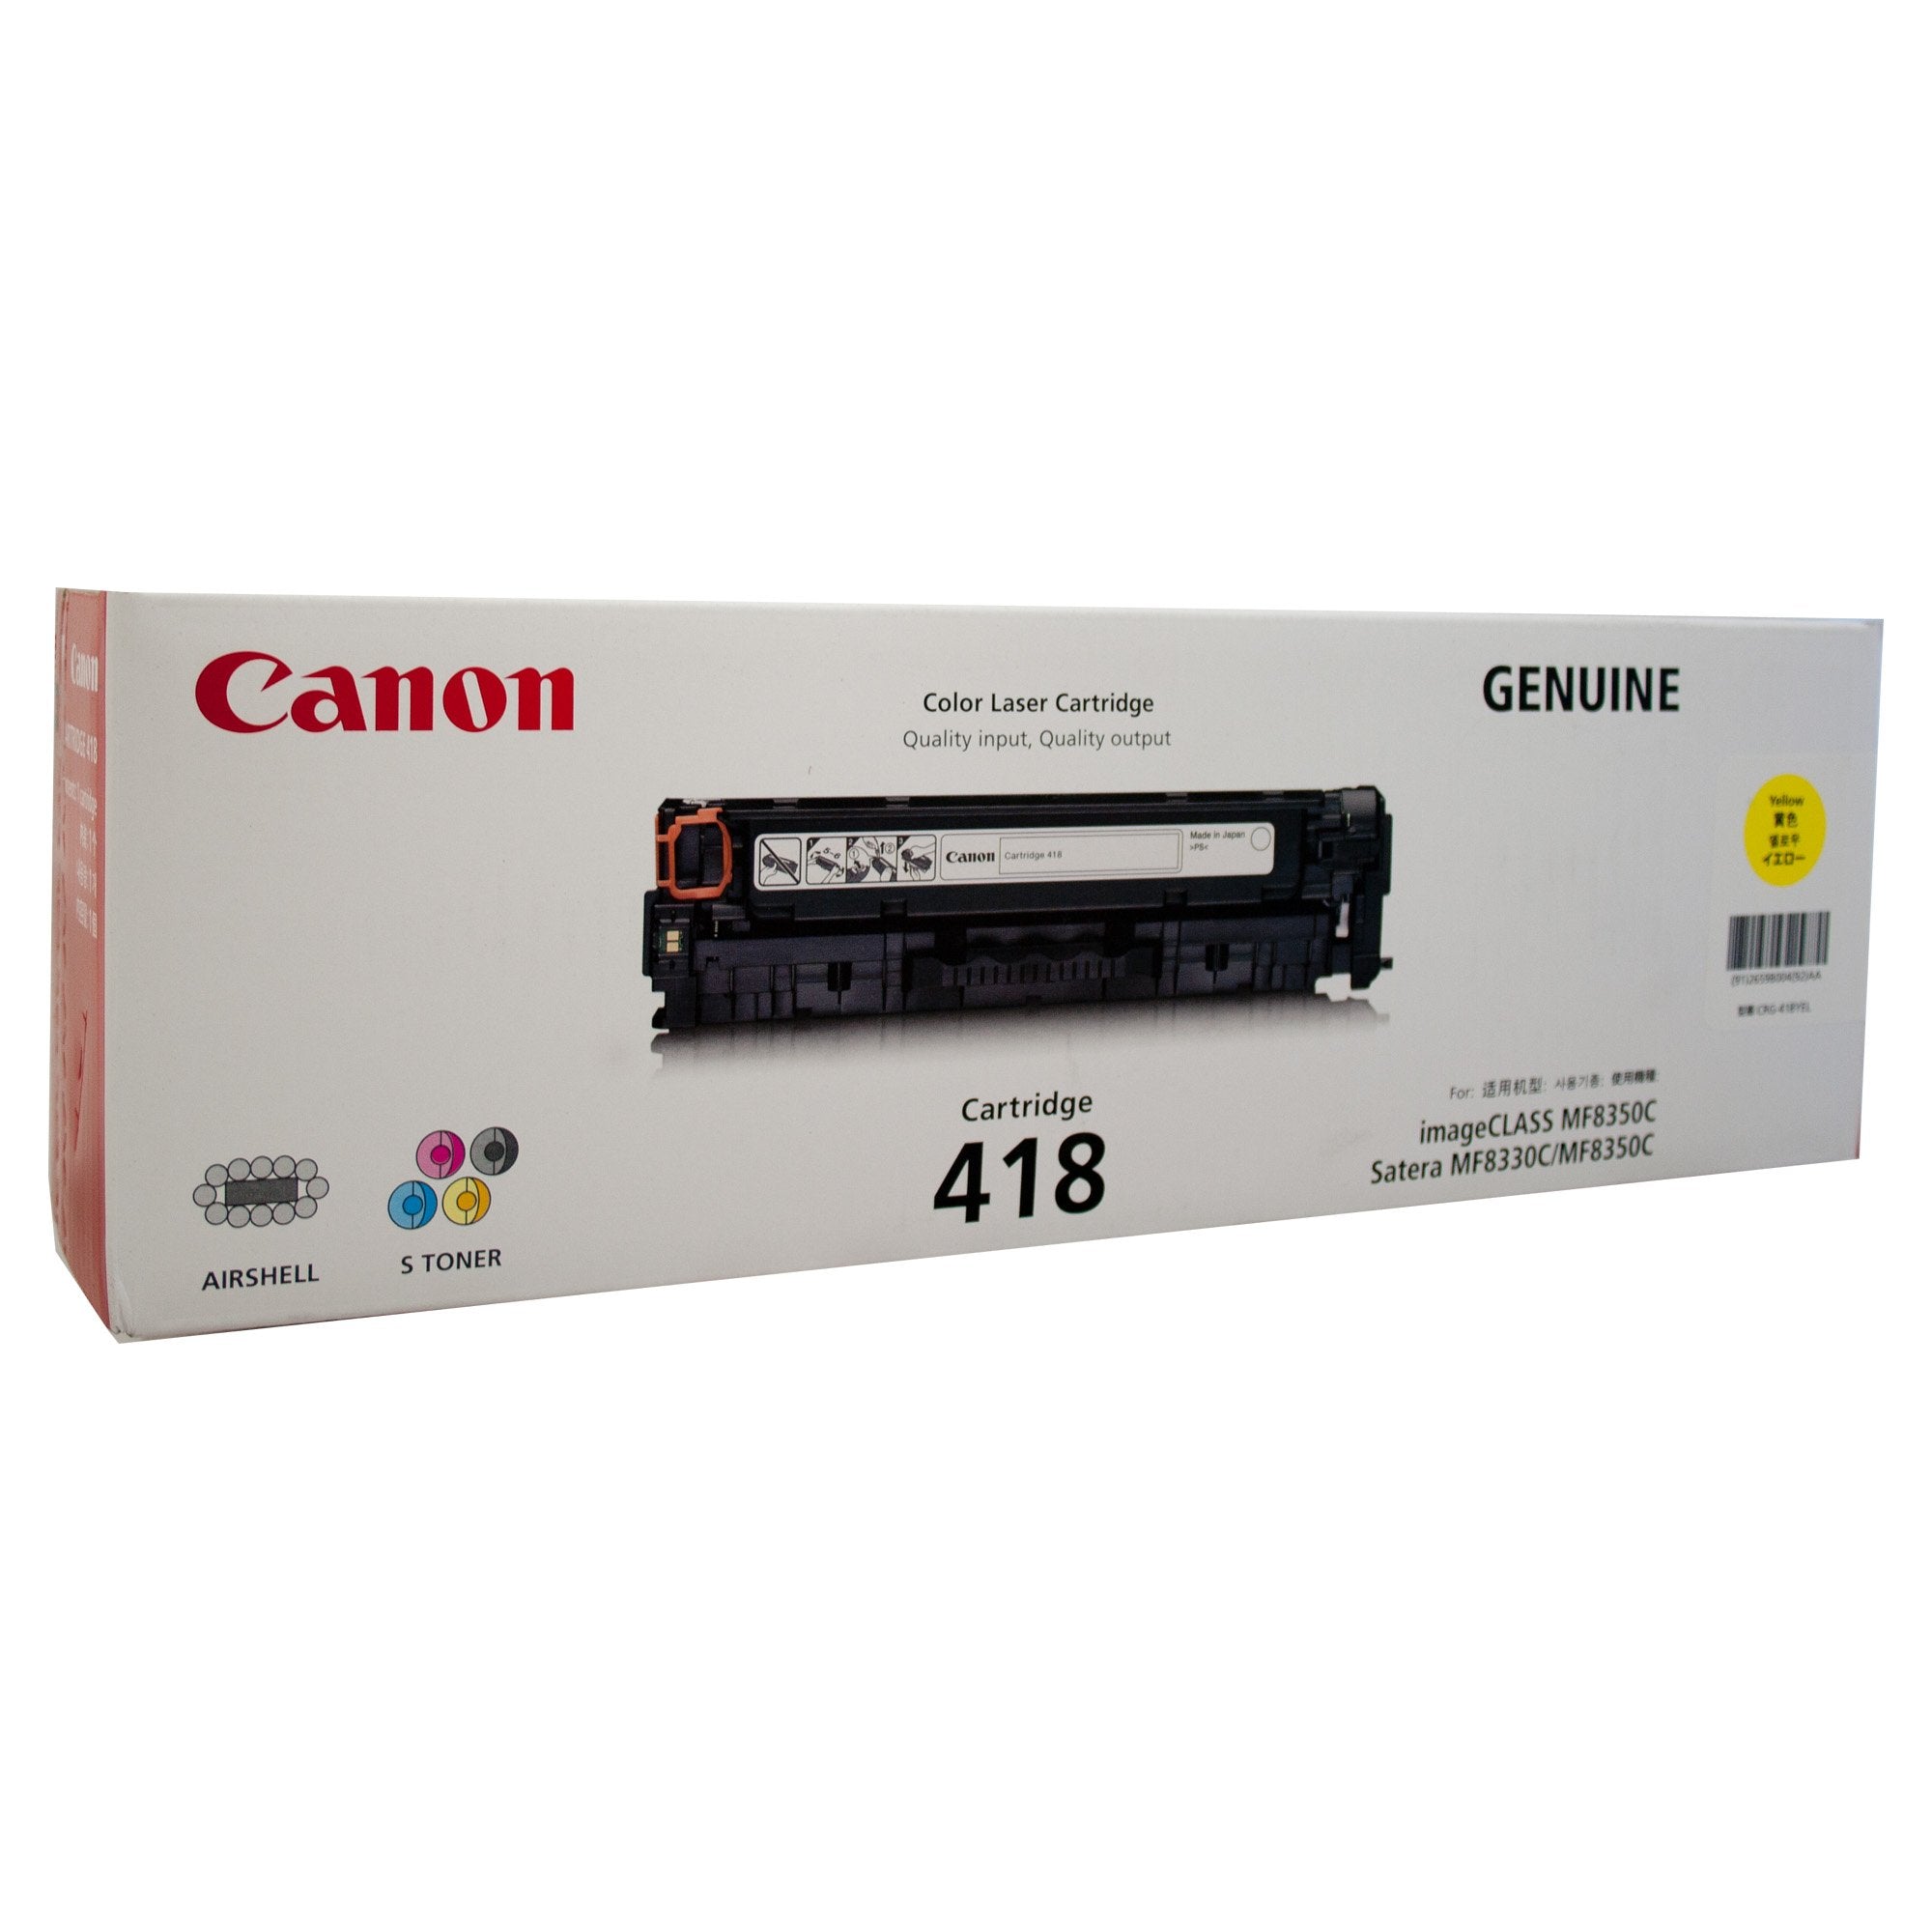 Canon CART418Y Yellow Toner Cartridge